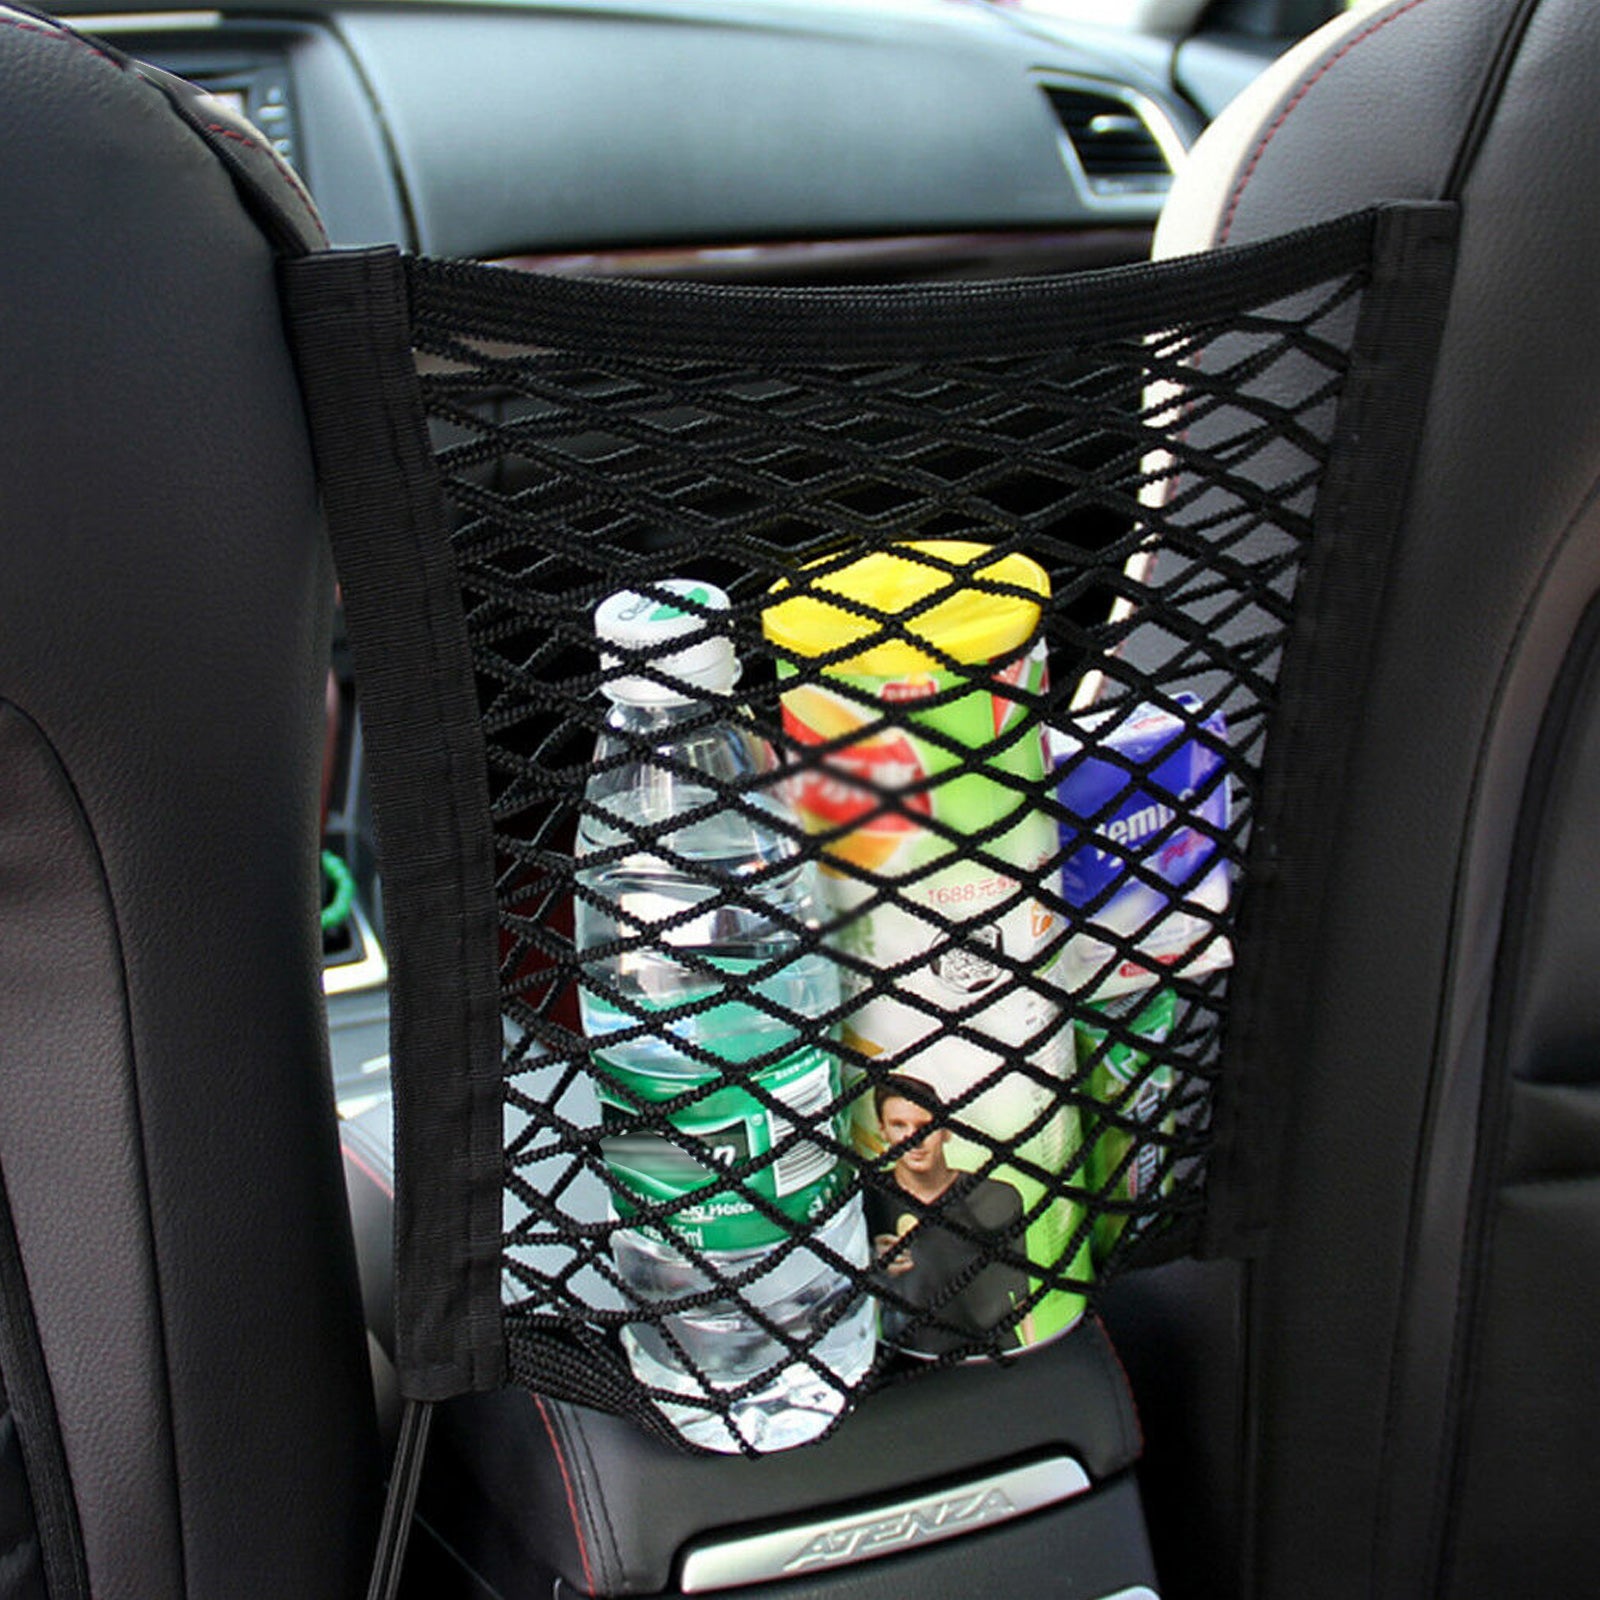 Universal Car Net Pocket Holder Organizer Between Car Seat Storage